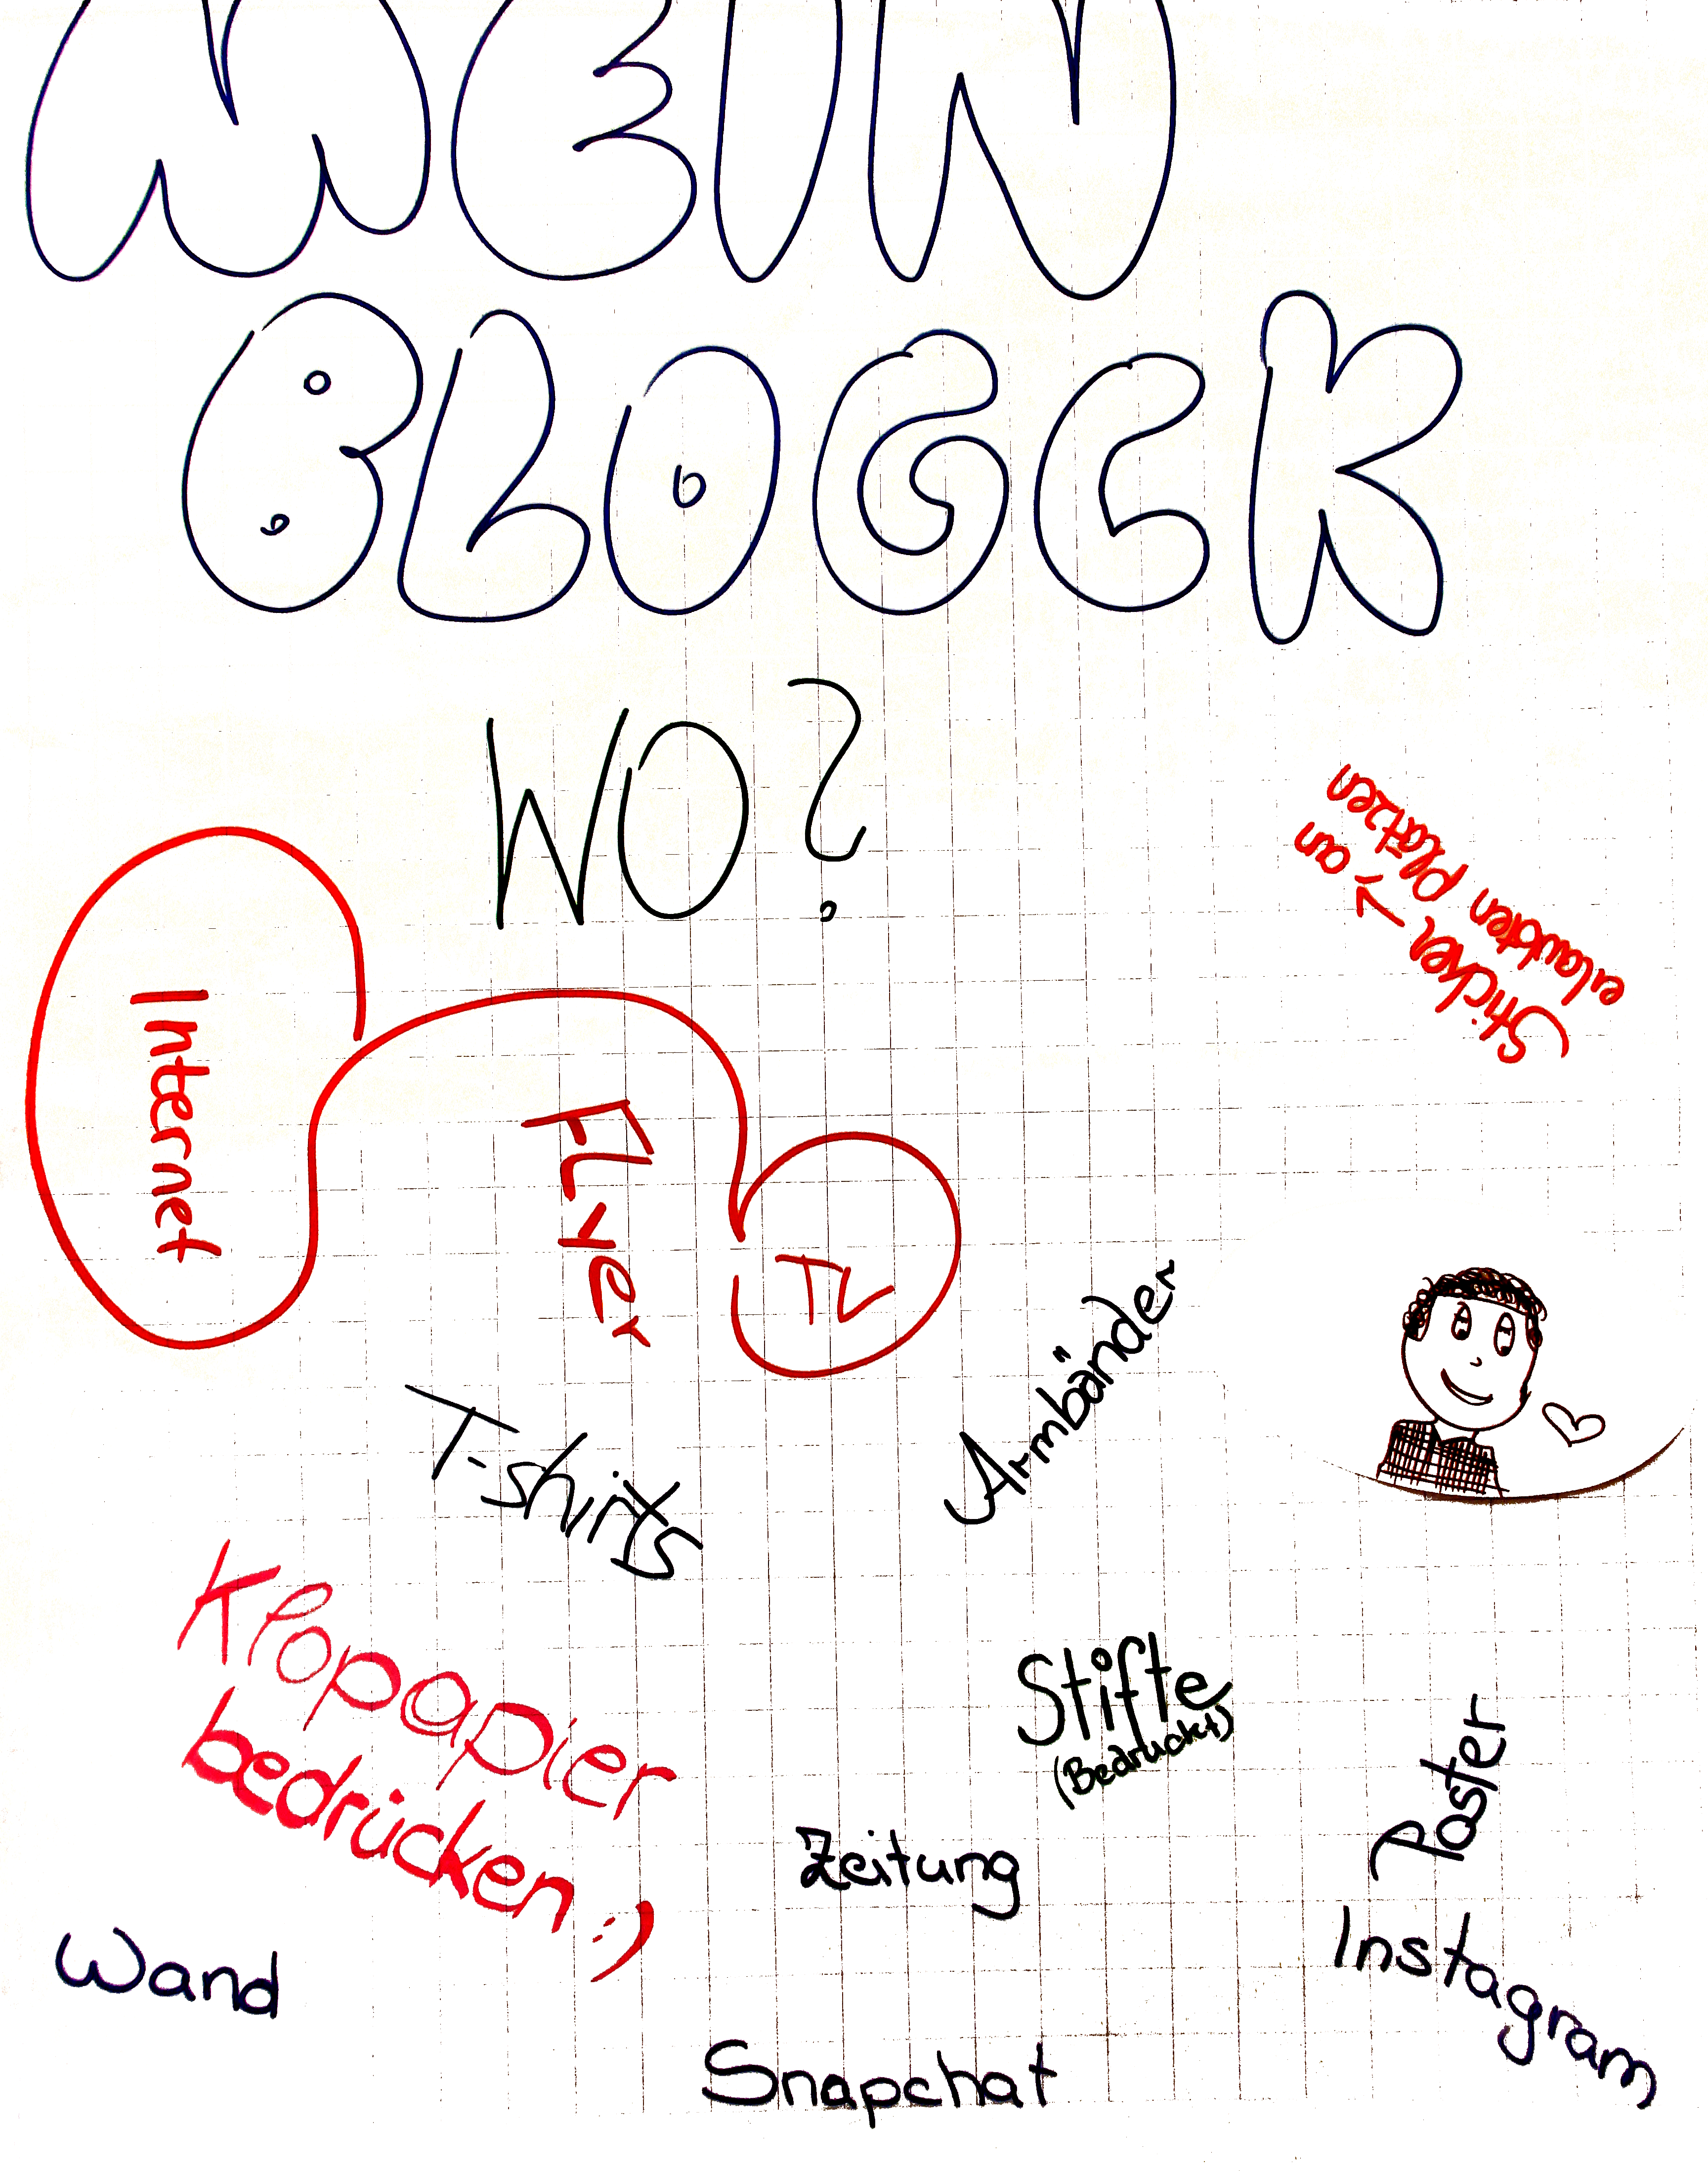 Blogck Workshop